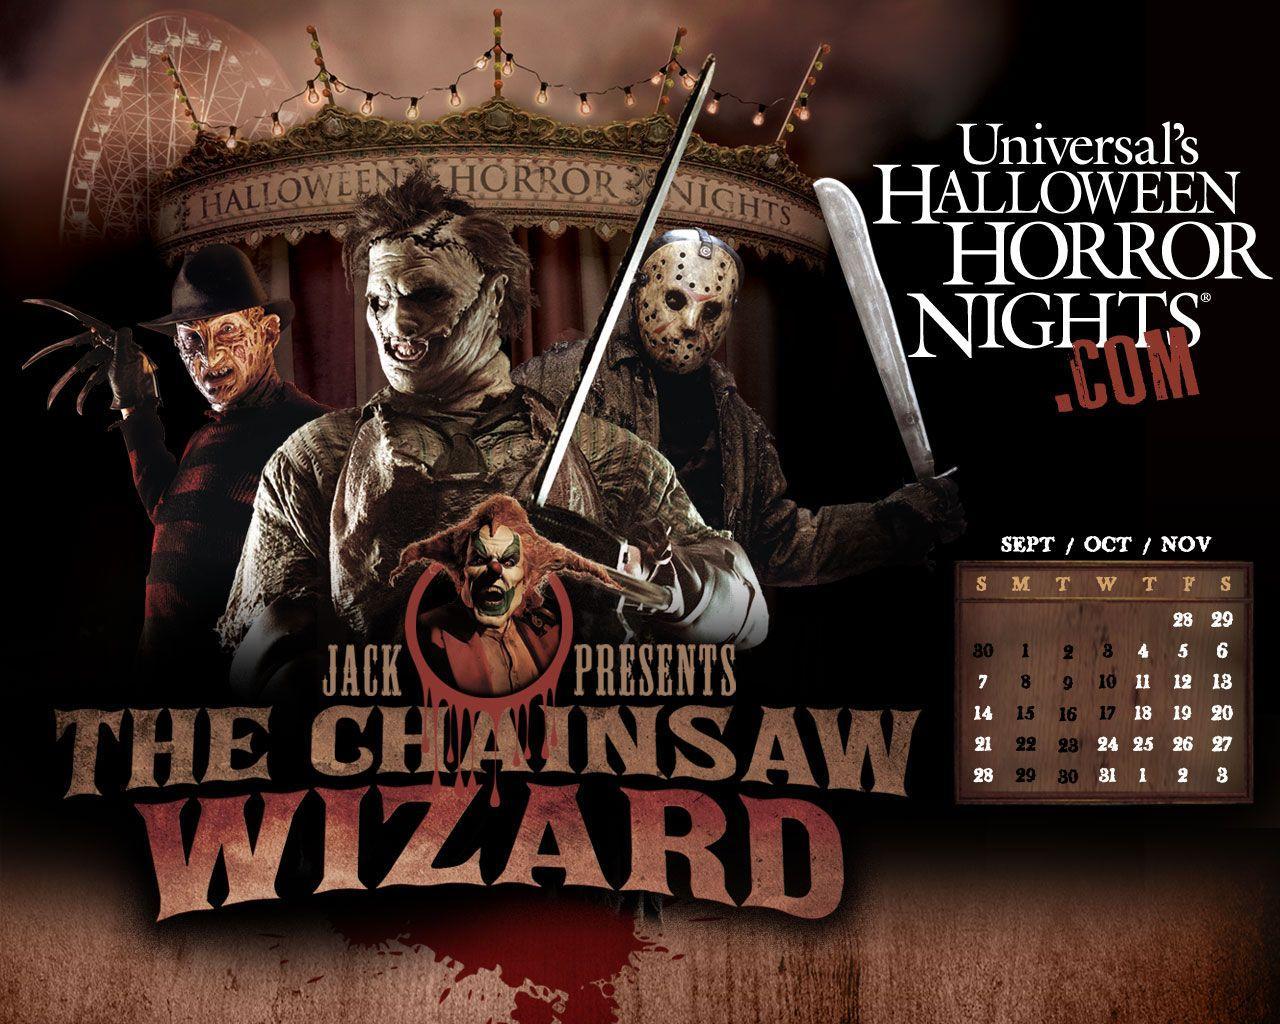 Halloween Horror Nights 2007 at Universal Studios